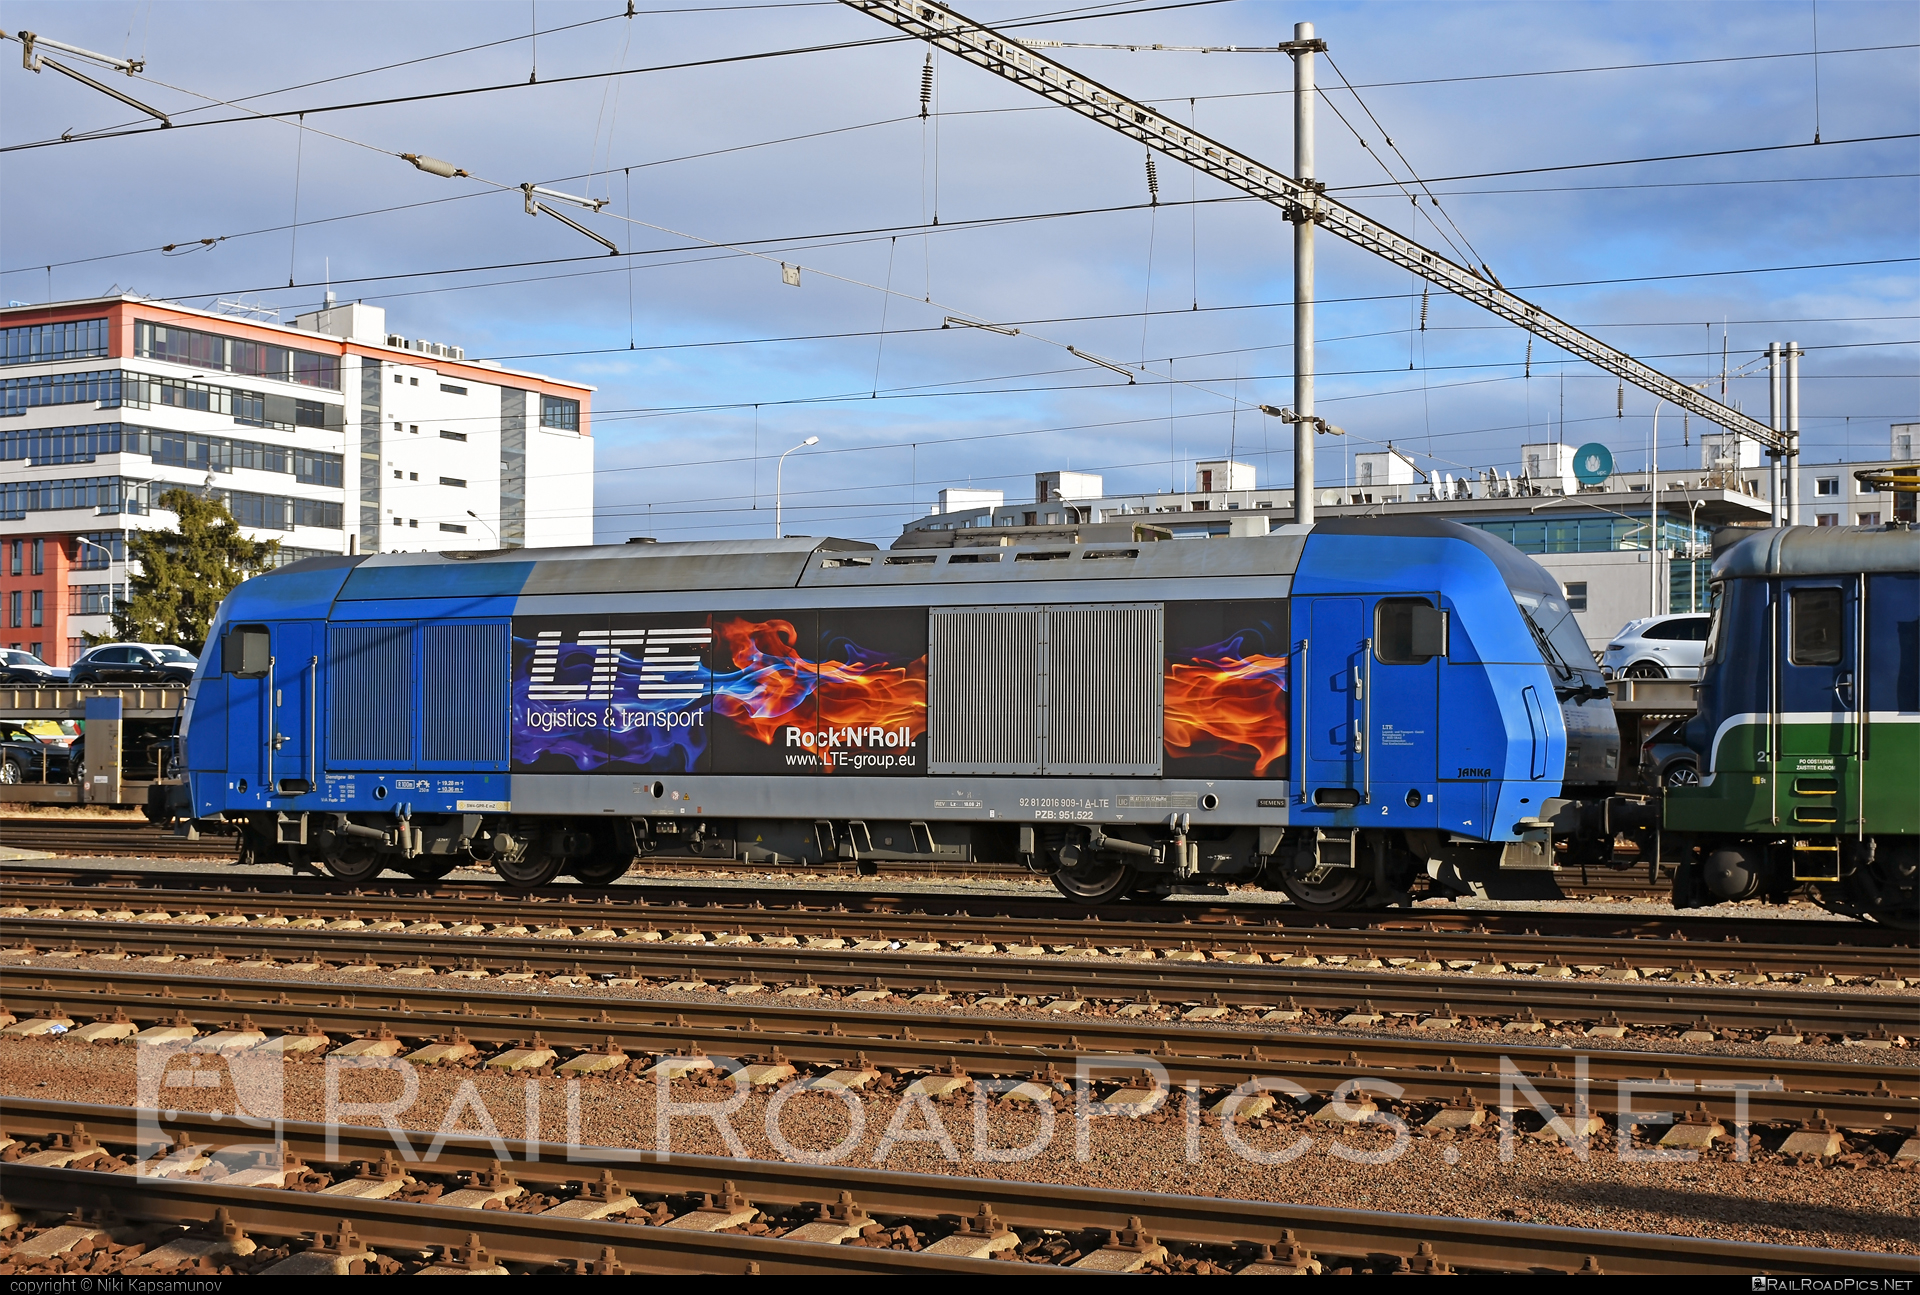 Siemens ER20 - 2016 909 operated by LTE Logistik und Transport GmbH #er20 #er20hercules #eurorunner #hercules #lte #ltelogistikundtransport #ltelogistikundtransportgmbh #siemens #siemenser20 #siemenser20hercules #siemenseurorunner #siemenshercules